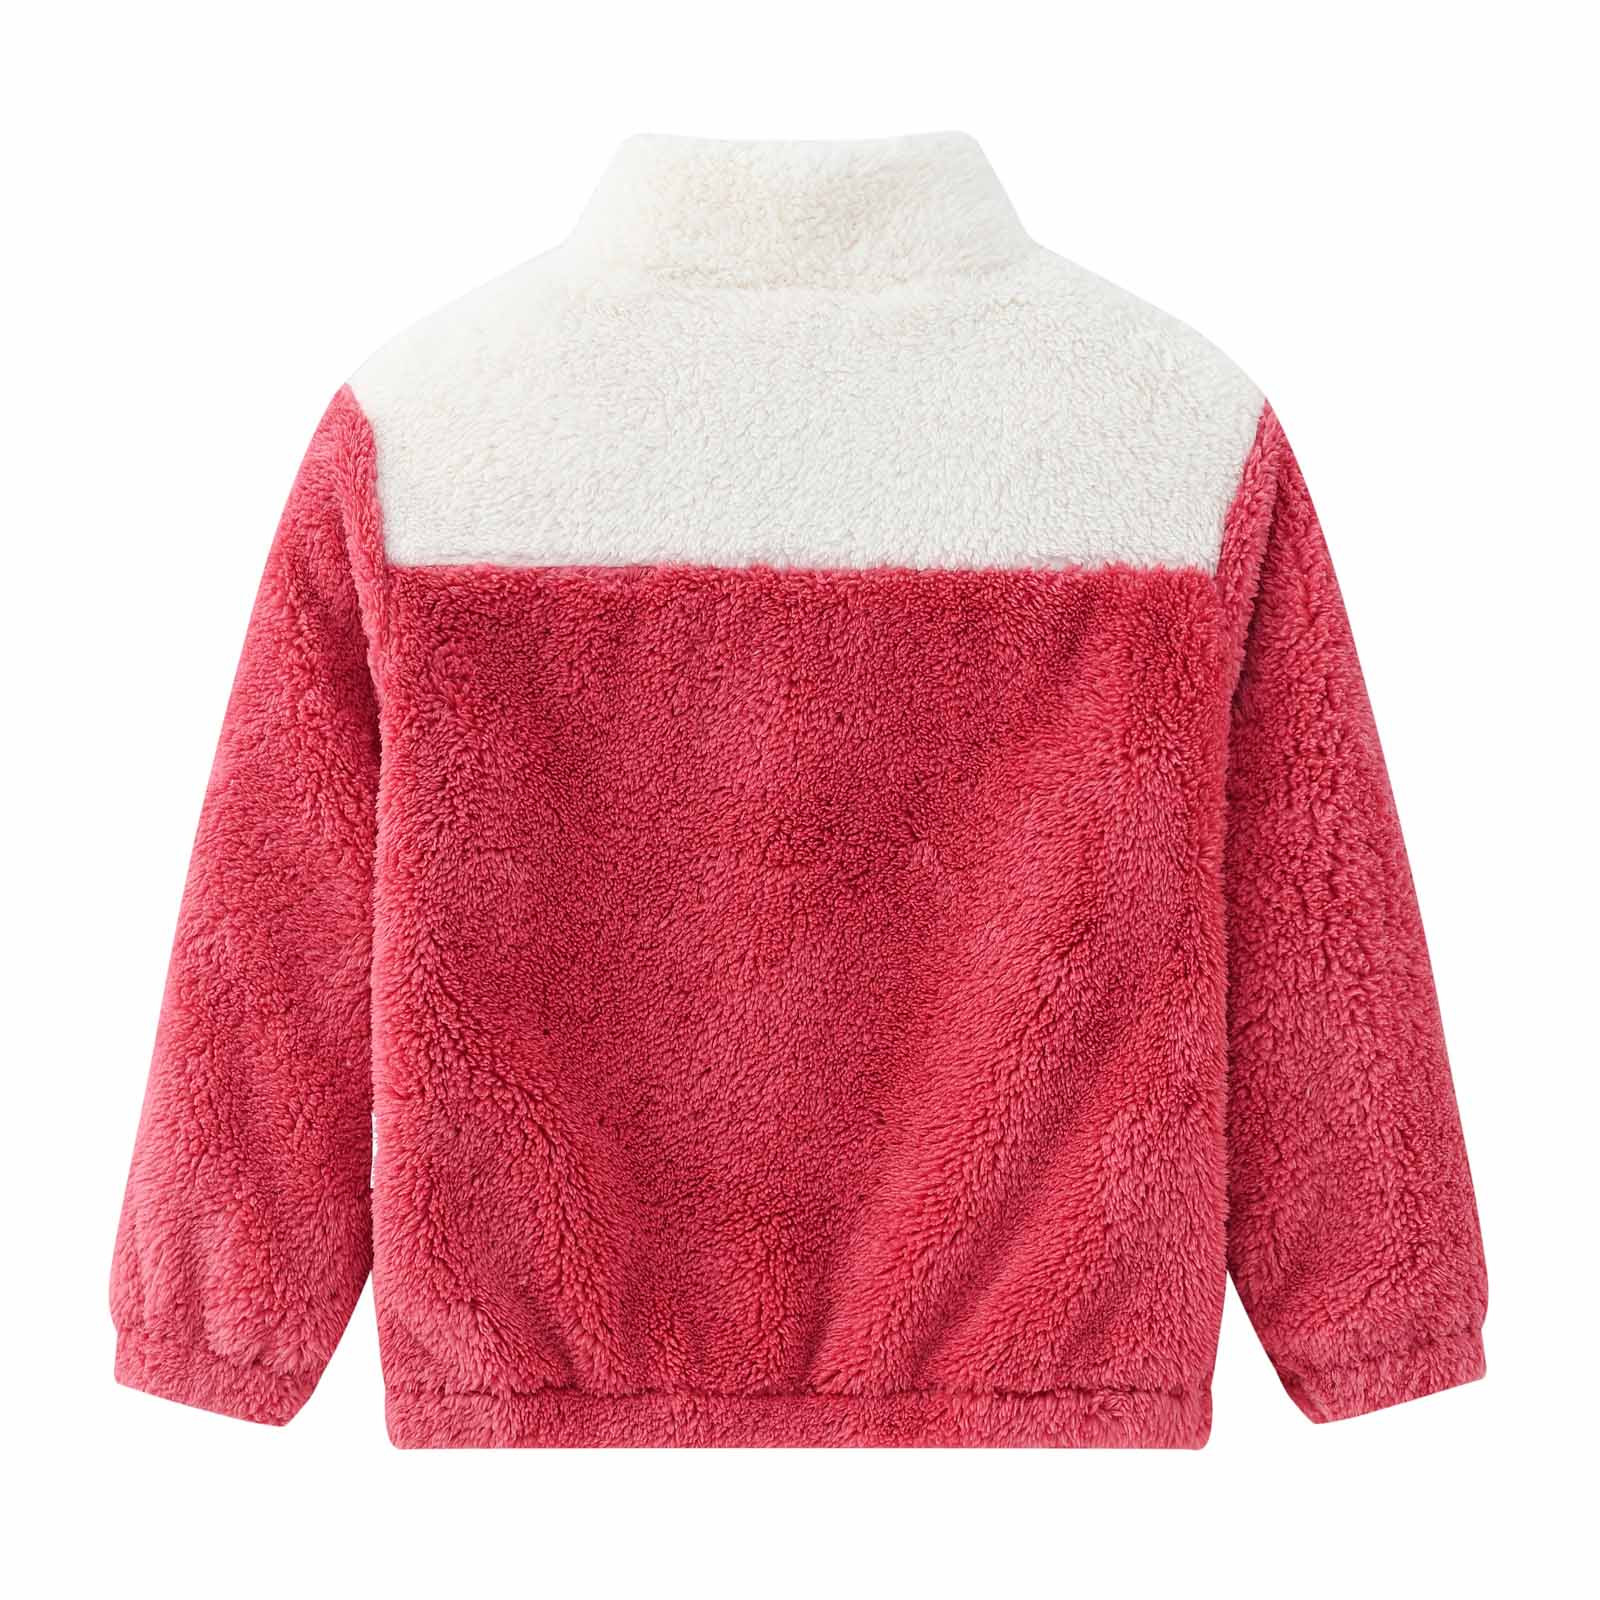 YYDGH Girls Zipper Jacket Fuzzy Sweatshirt Long Sleeve Casual Cozy Fleece Sherpa Outwear Coat Full-Zip Rainbow Jackets(Red,2-3 Years) - image 4 of 8